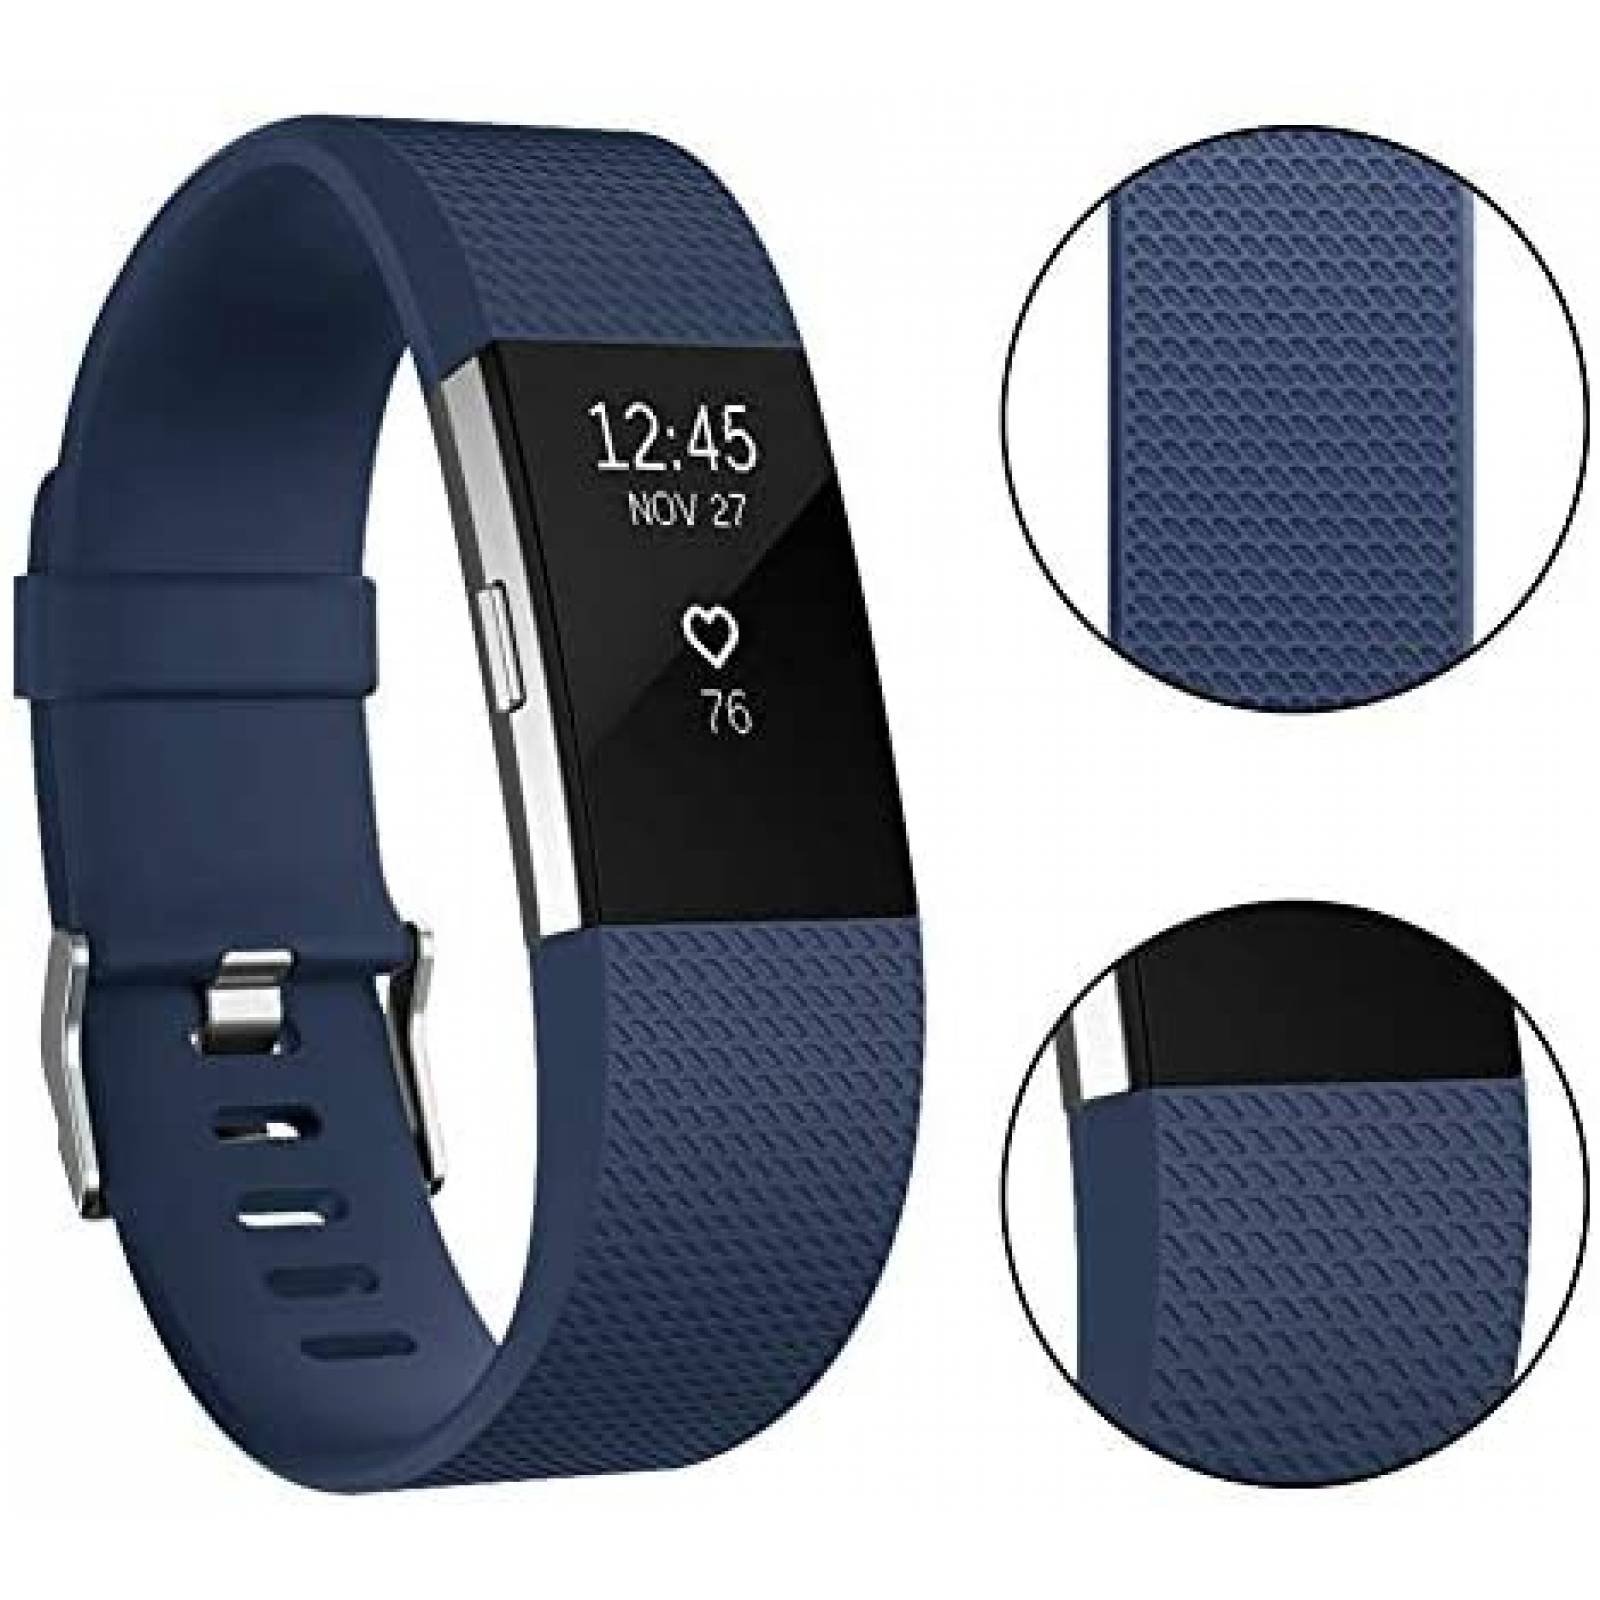 Bandas para Smartwatch IEOVIEE Fitbit Charge 2 3 Pzs L